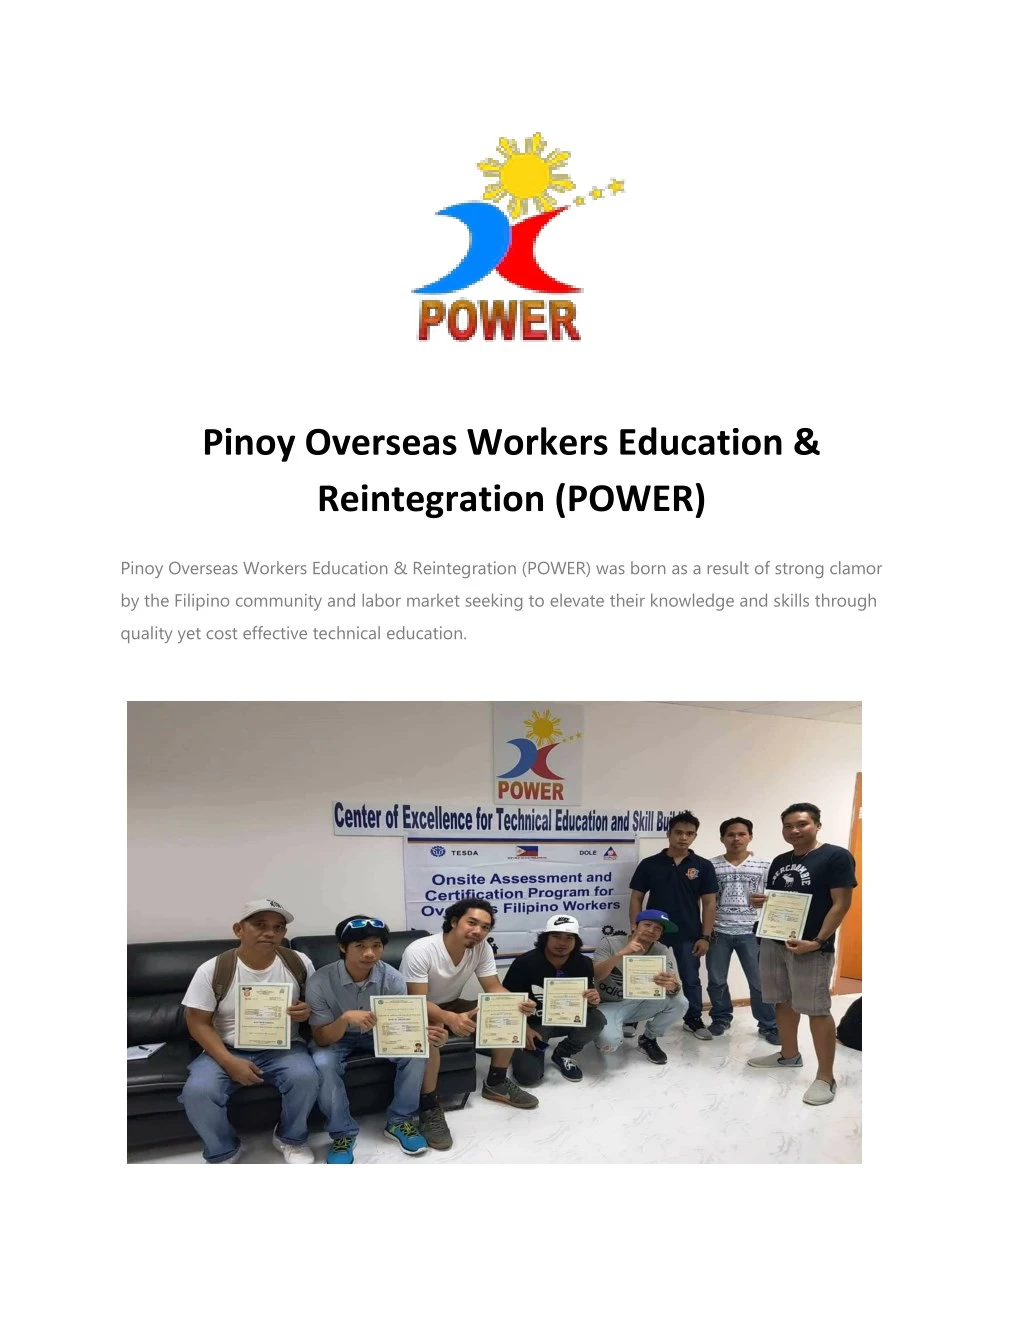 pinoy overseas workers education reintegration